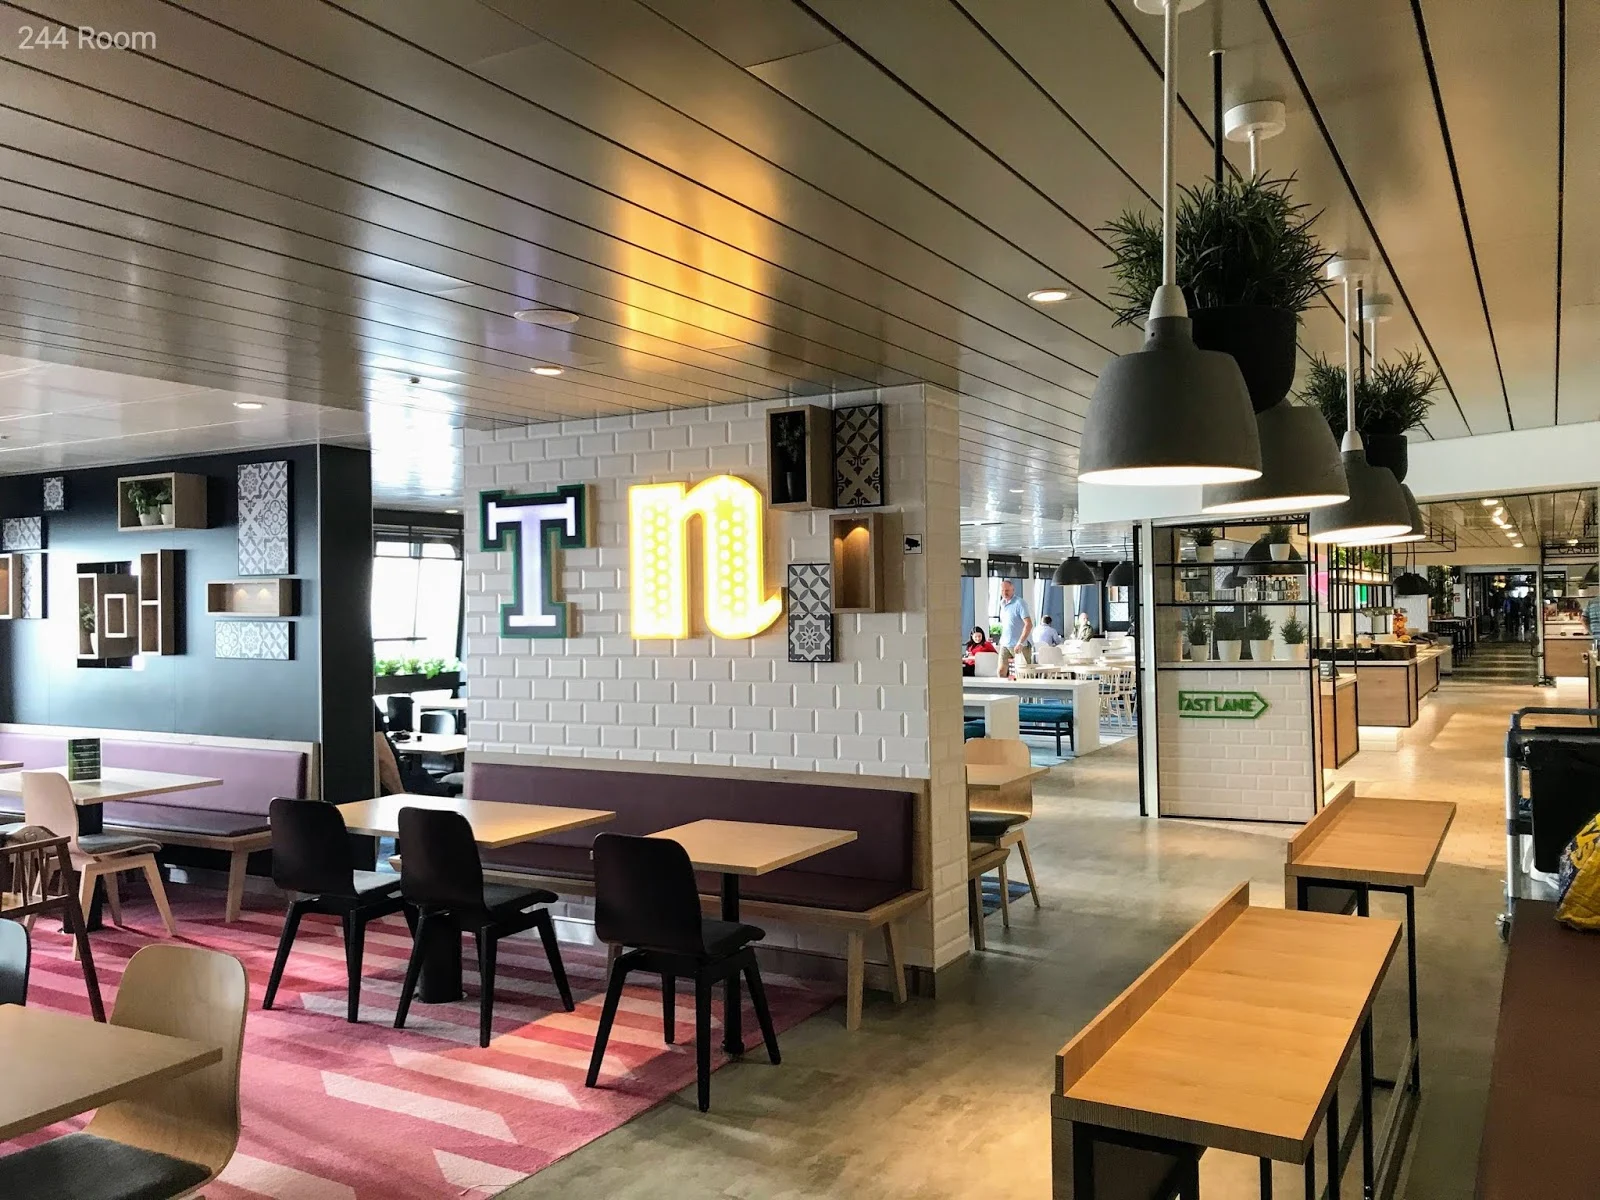 Tallinksilja line Megastar ferry cafe